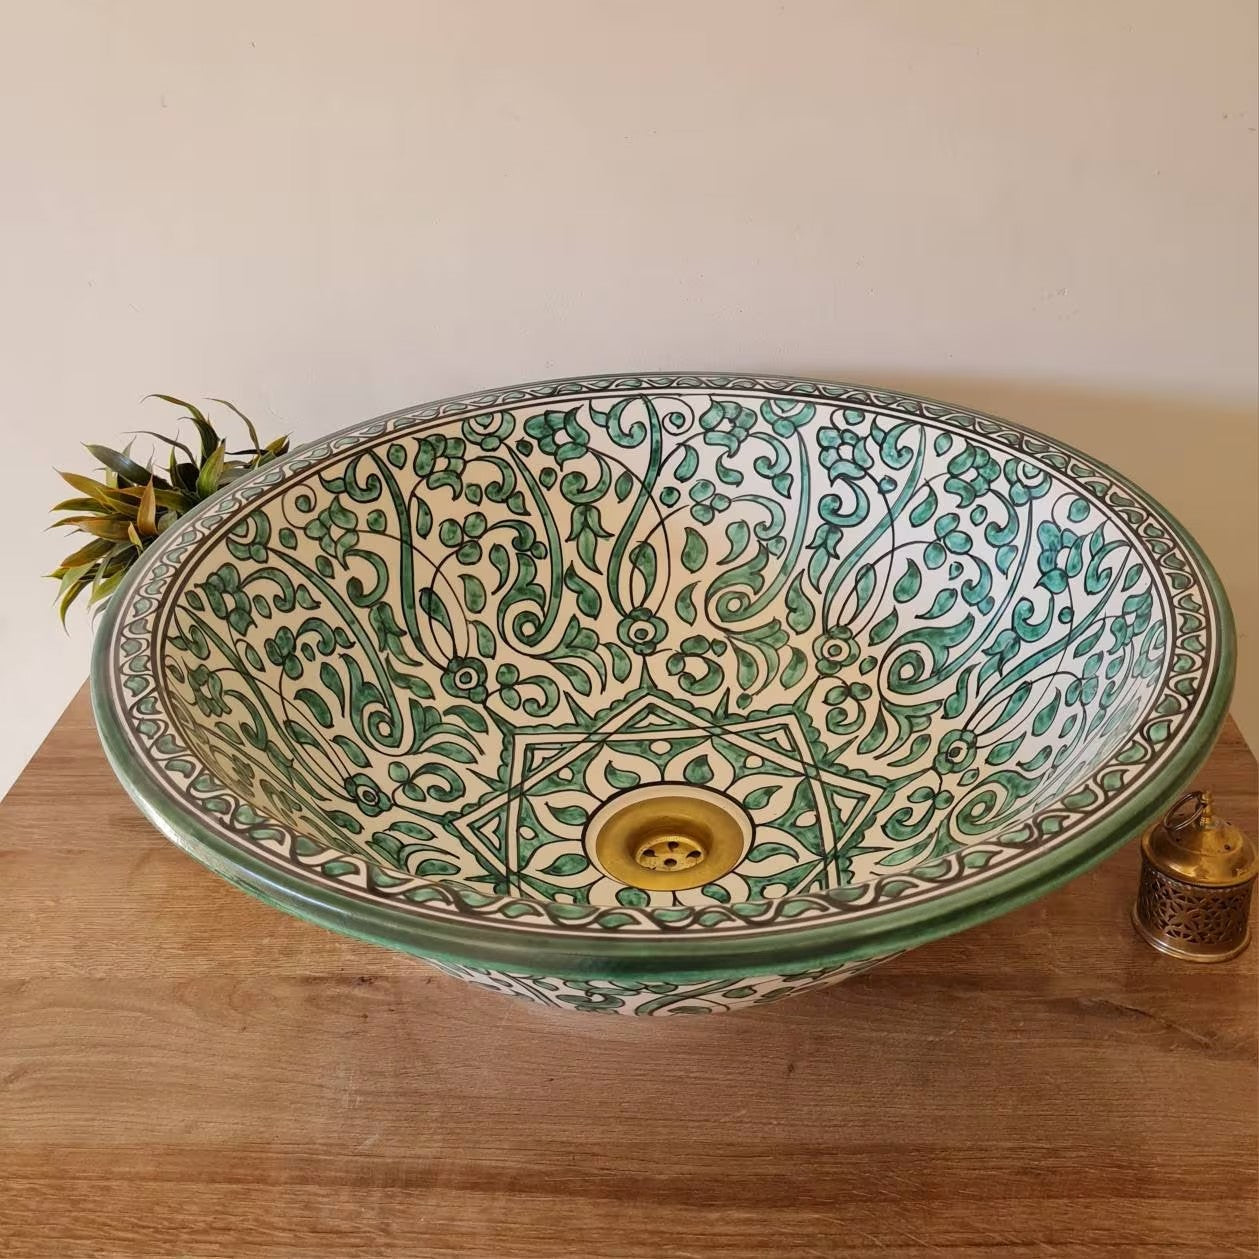 Moroccan sink | moroccan ceramic sink | bathroom sink | moroccan sink bowl #230